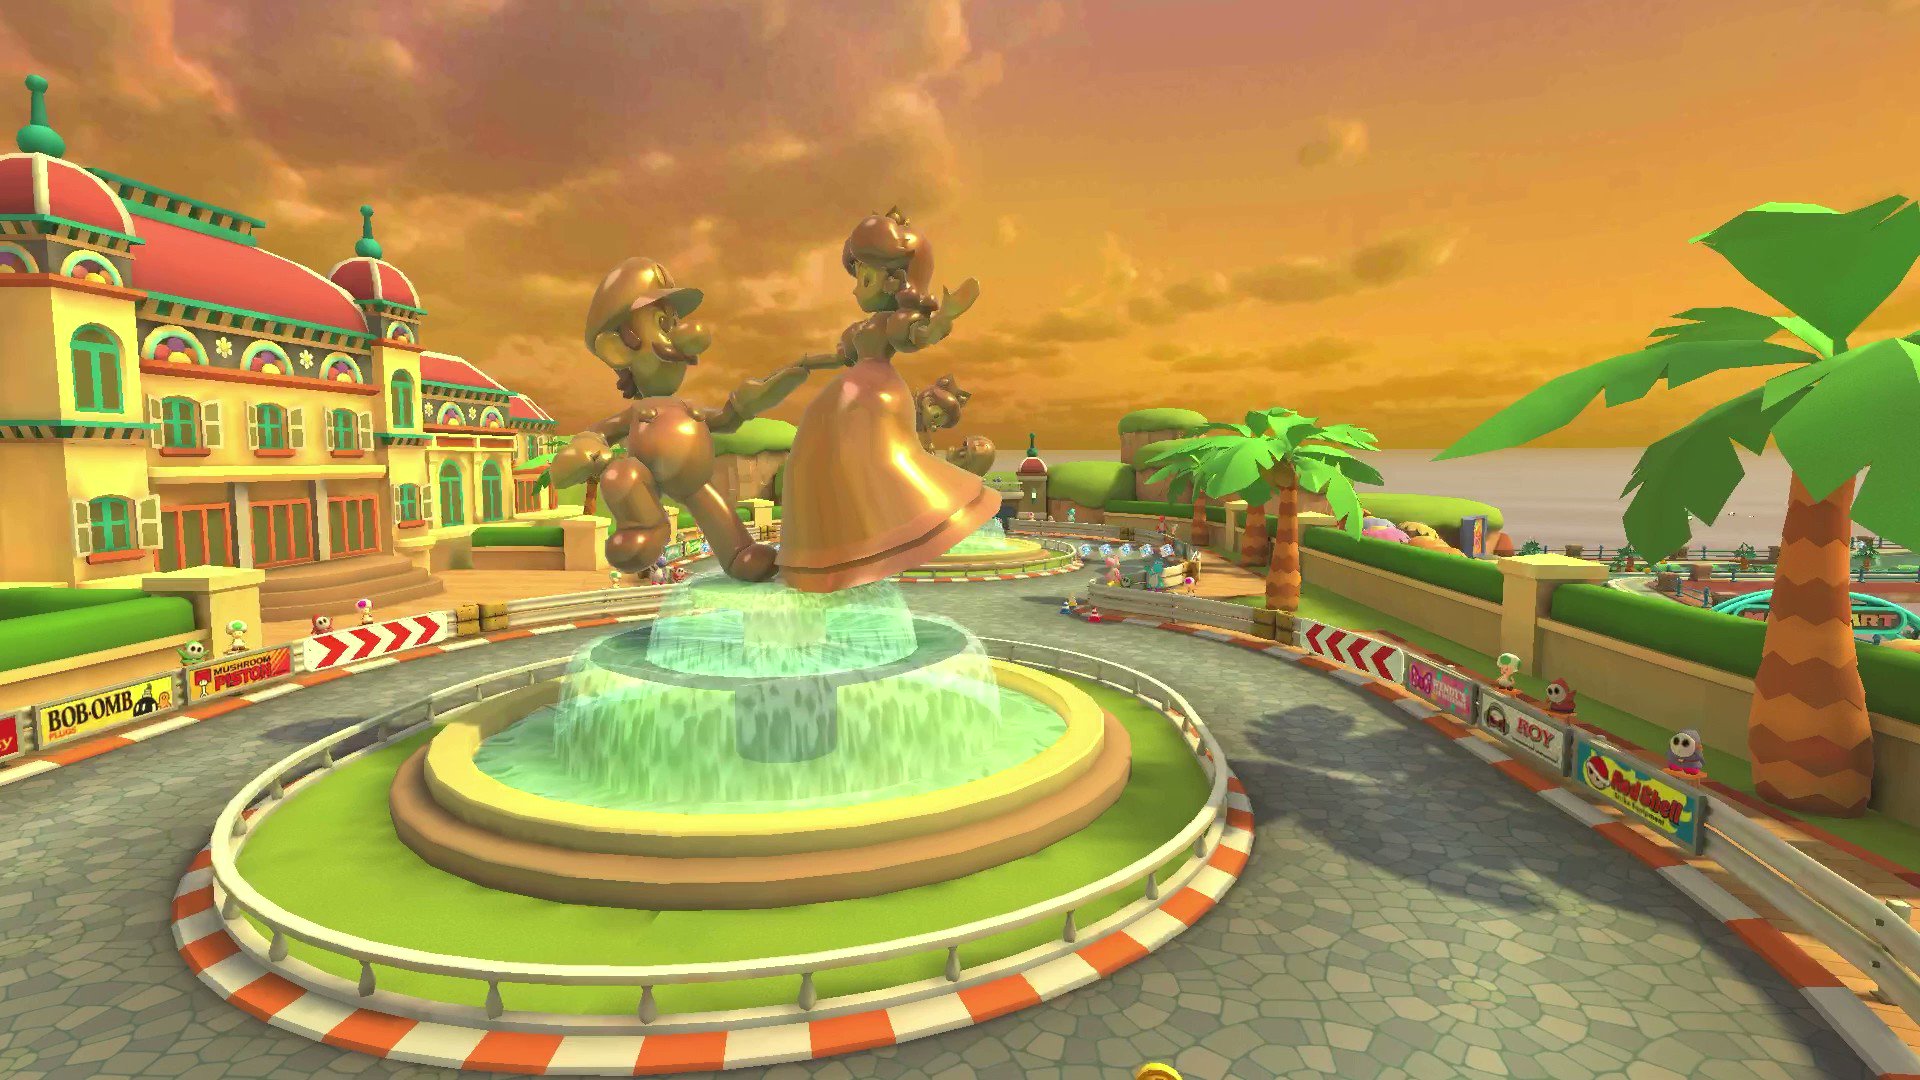 Wii Daisy Circuit coming to Mario Kart Tour : r/mariokart